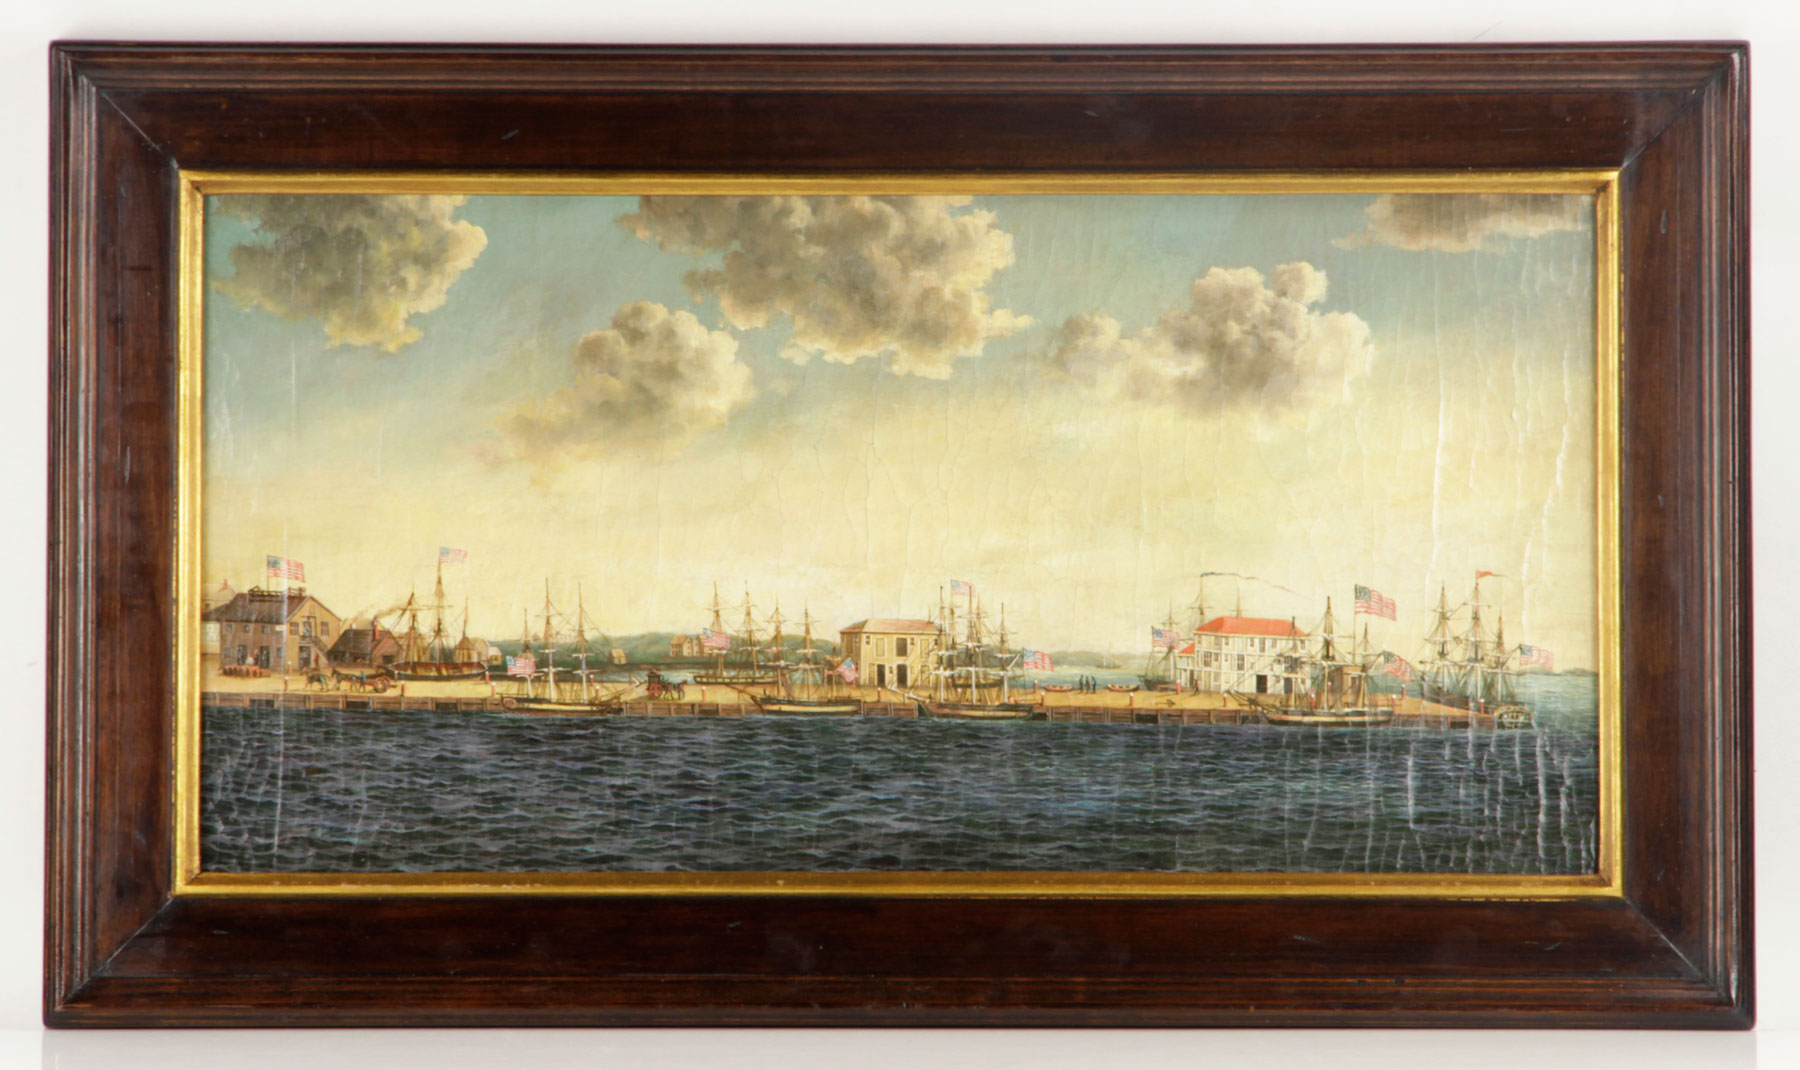 View of Salem, Massachusetts Harbor, Oil on Canvas